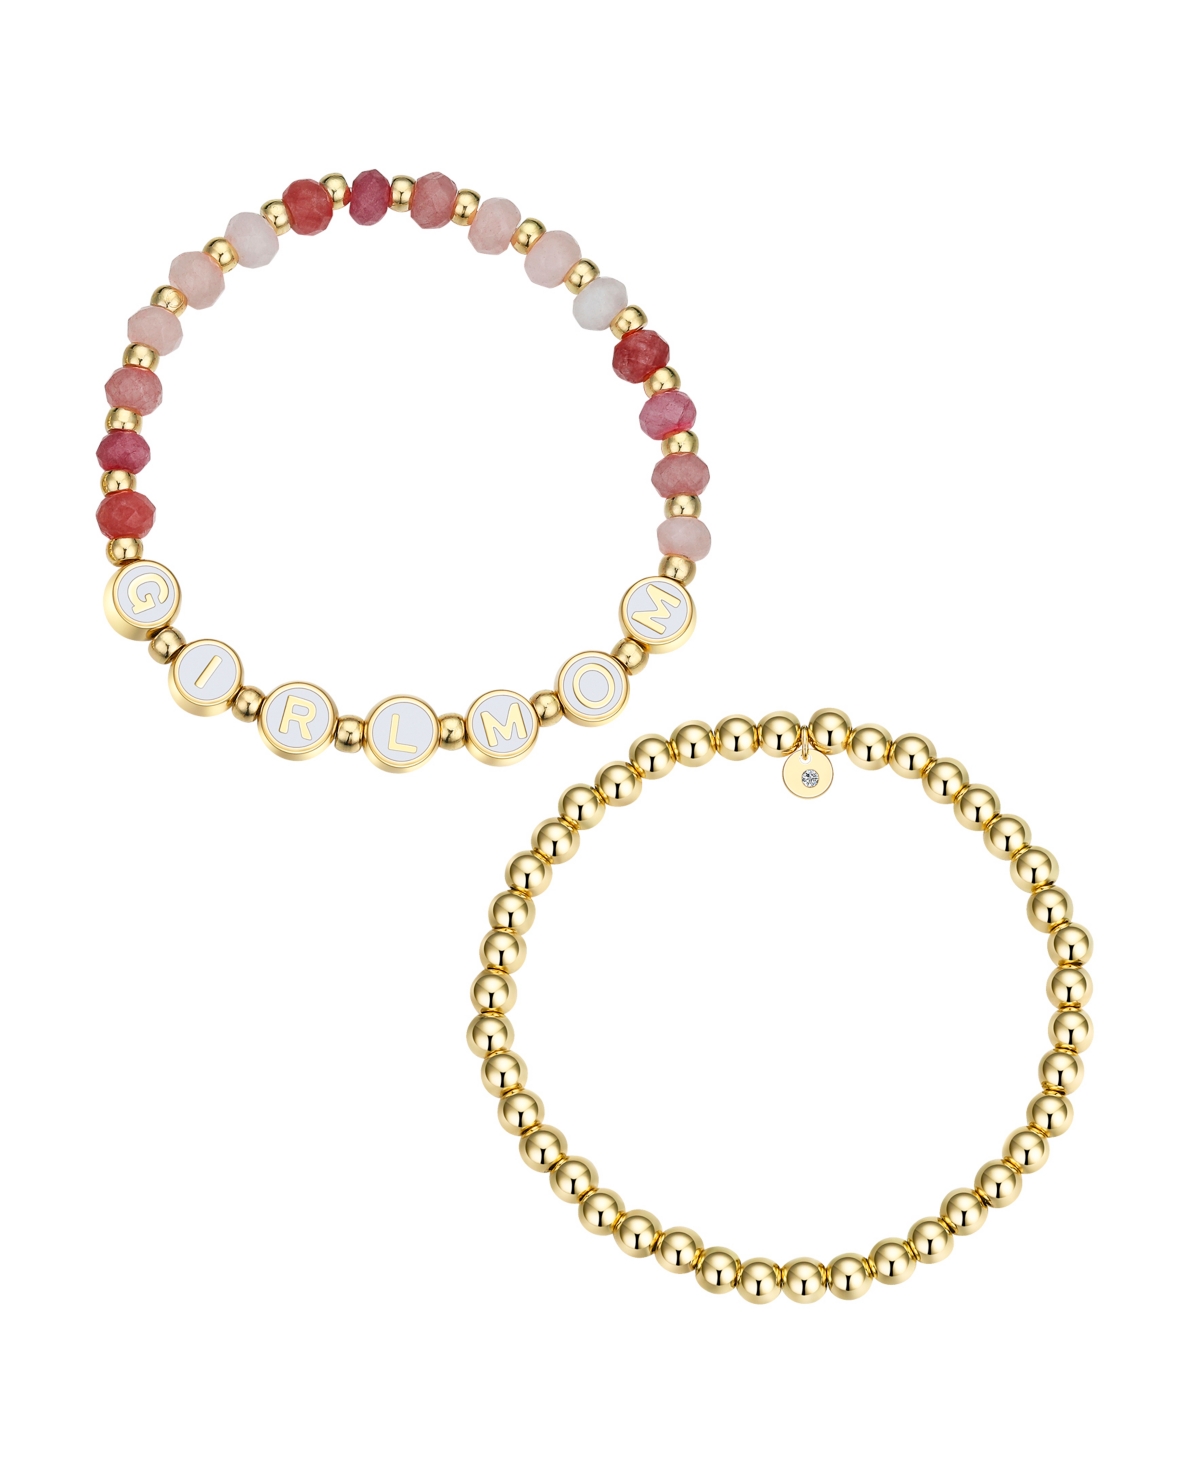 Shop Unwritten Multi Pink Quartz Girl Mom Stone And Beaded Stretch Bracelet Set In Gold